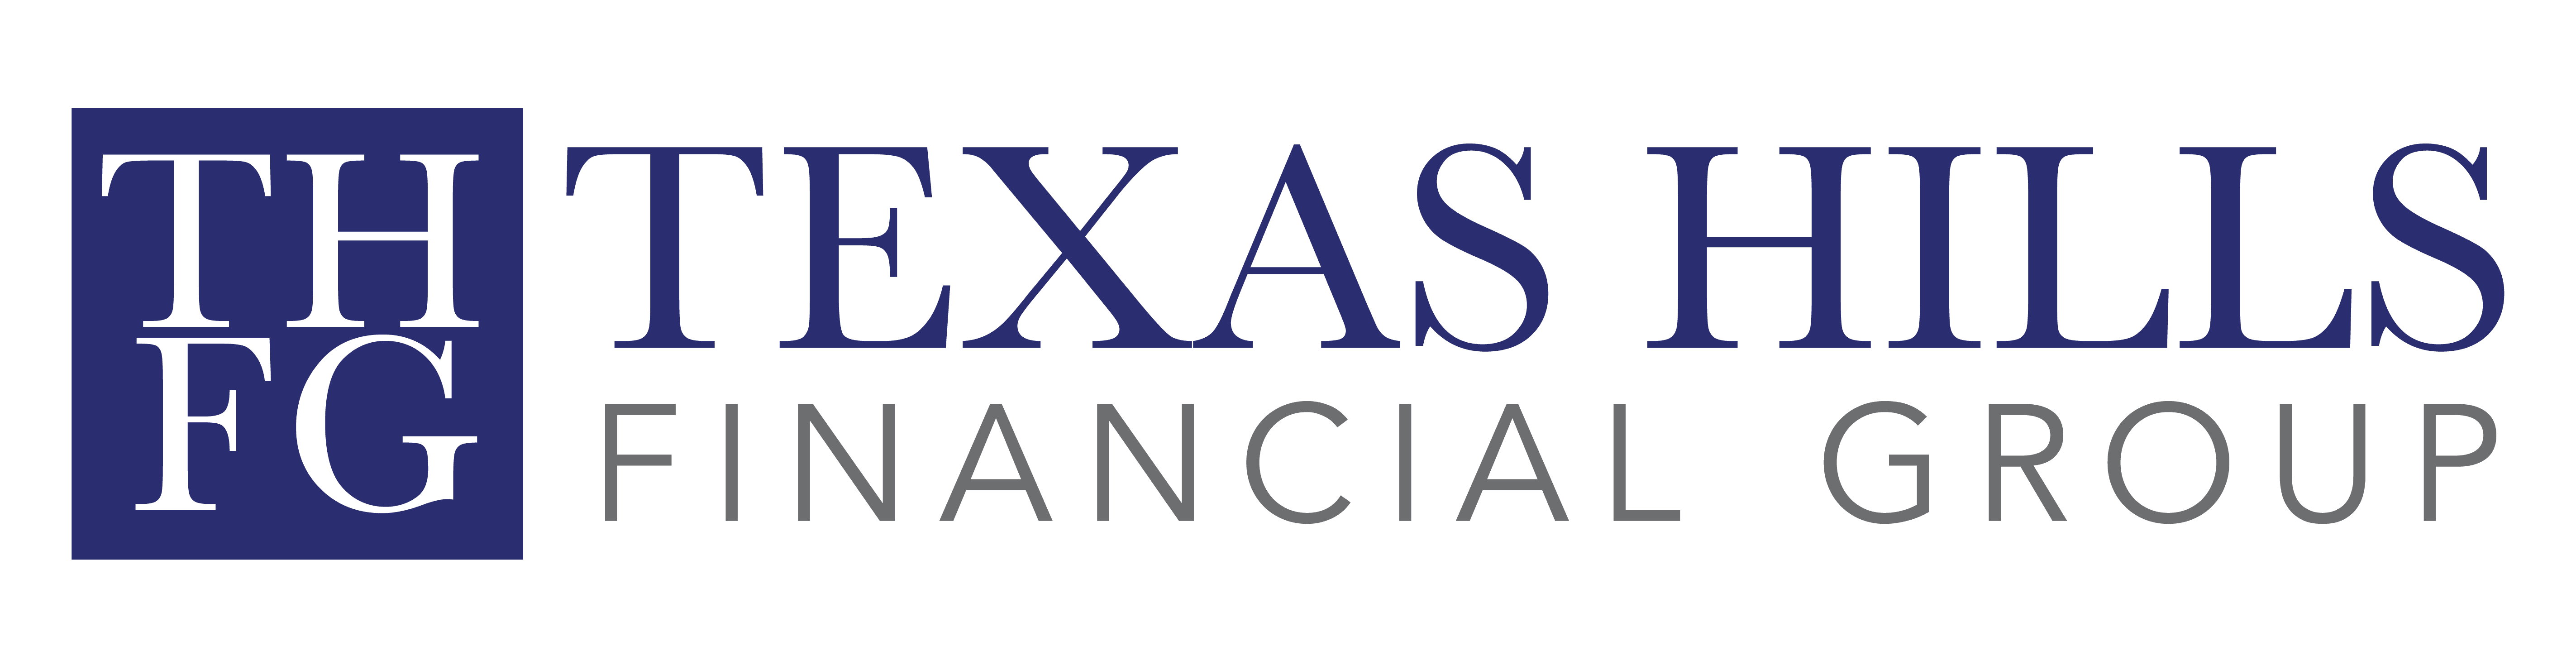 Texas Hills Financial Group